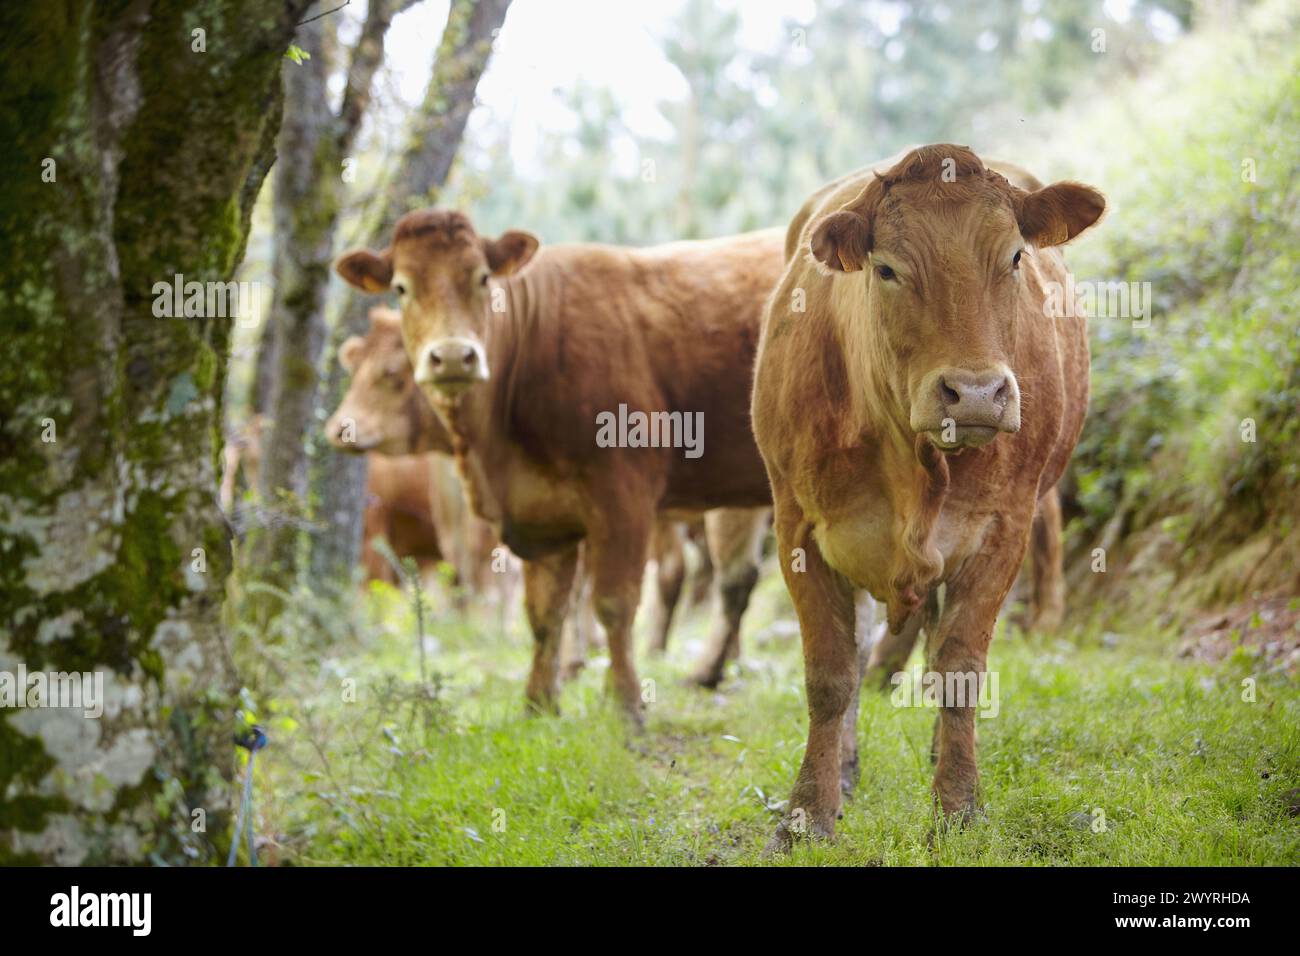 Limousin cows, cattle, Beizama, Guipuzcoa, Basque Country, Spain. Stock Photo